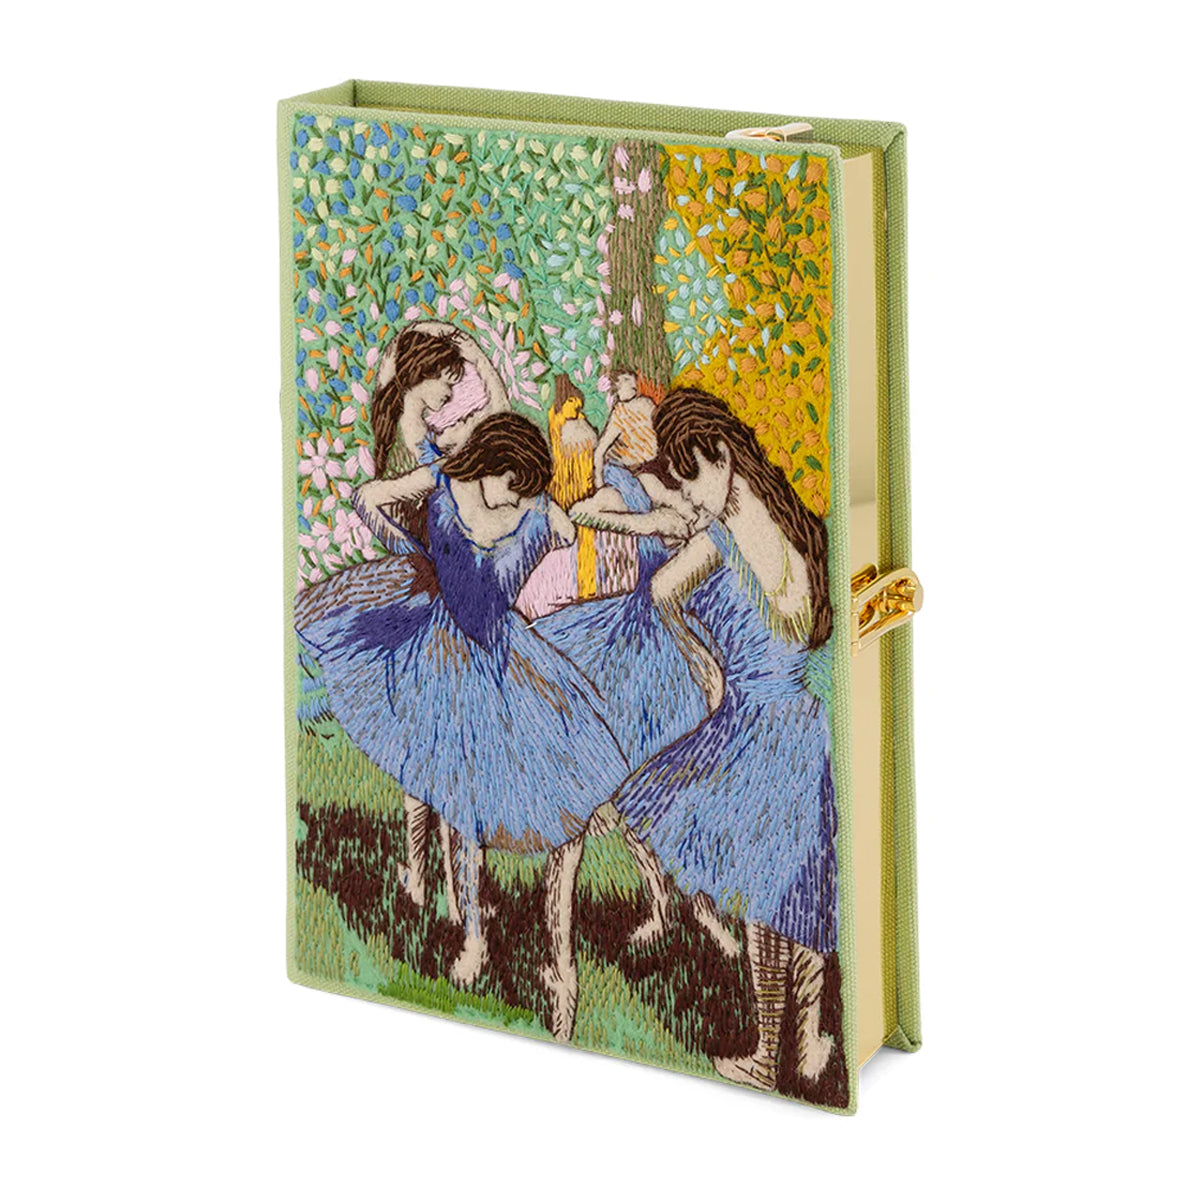 Degas "Blue Ballerinas" Book Clutch with Strap - Olympia Le-Tan